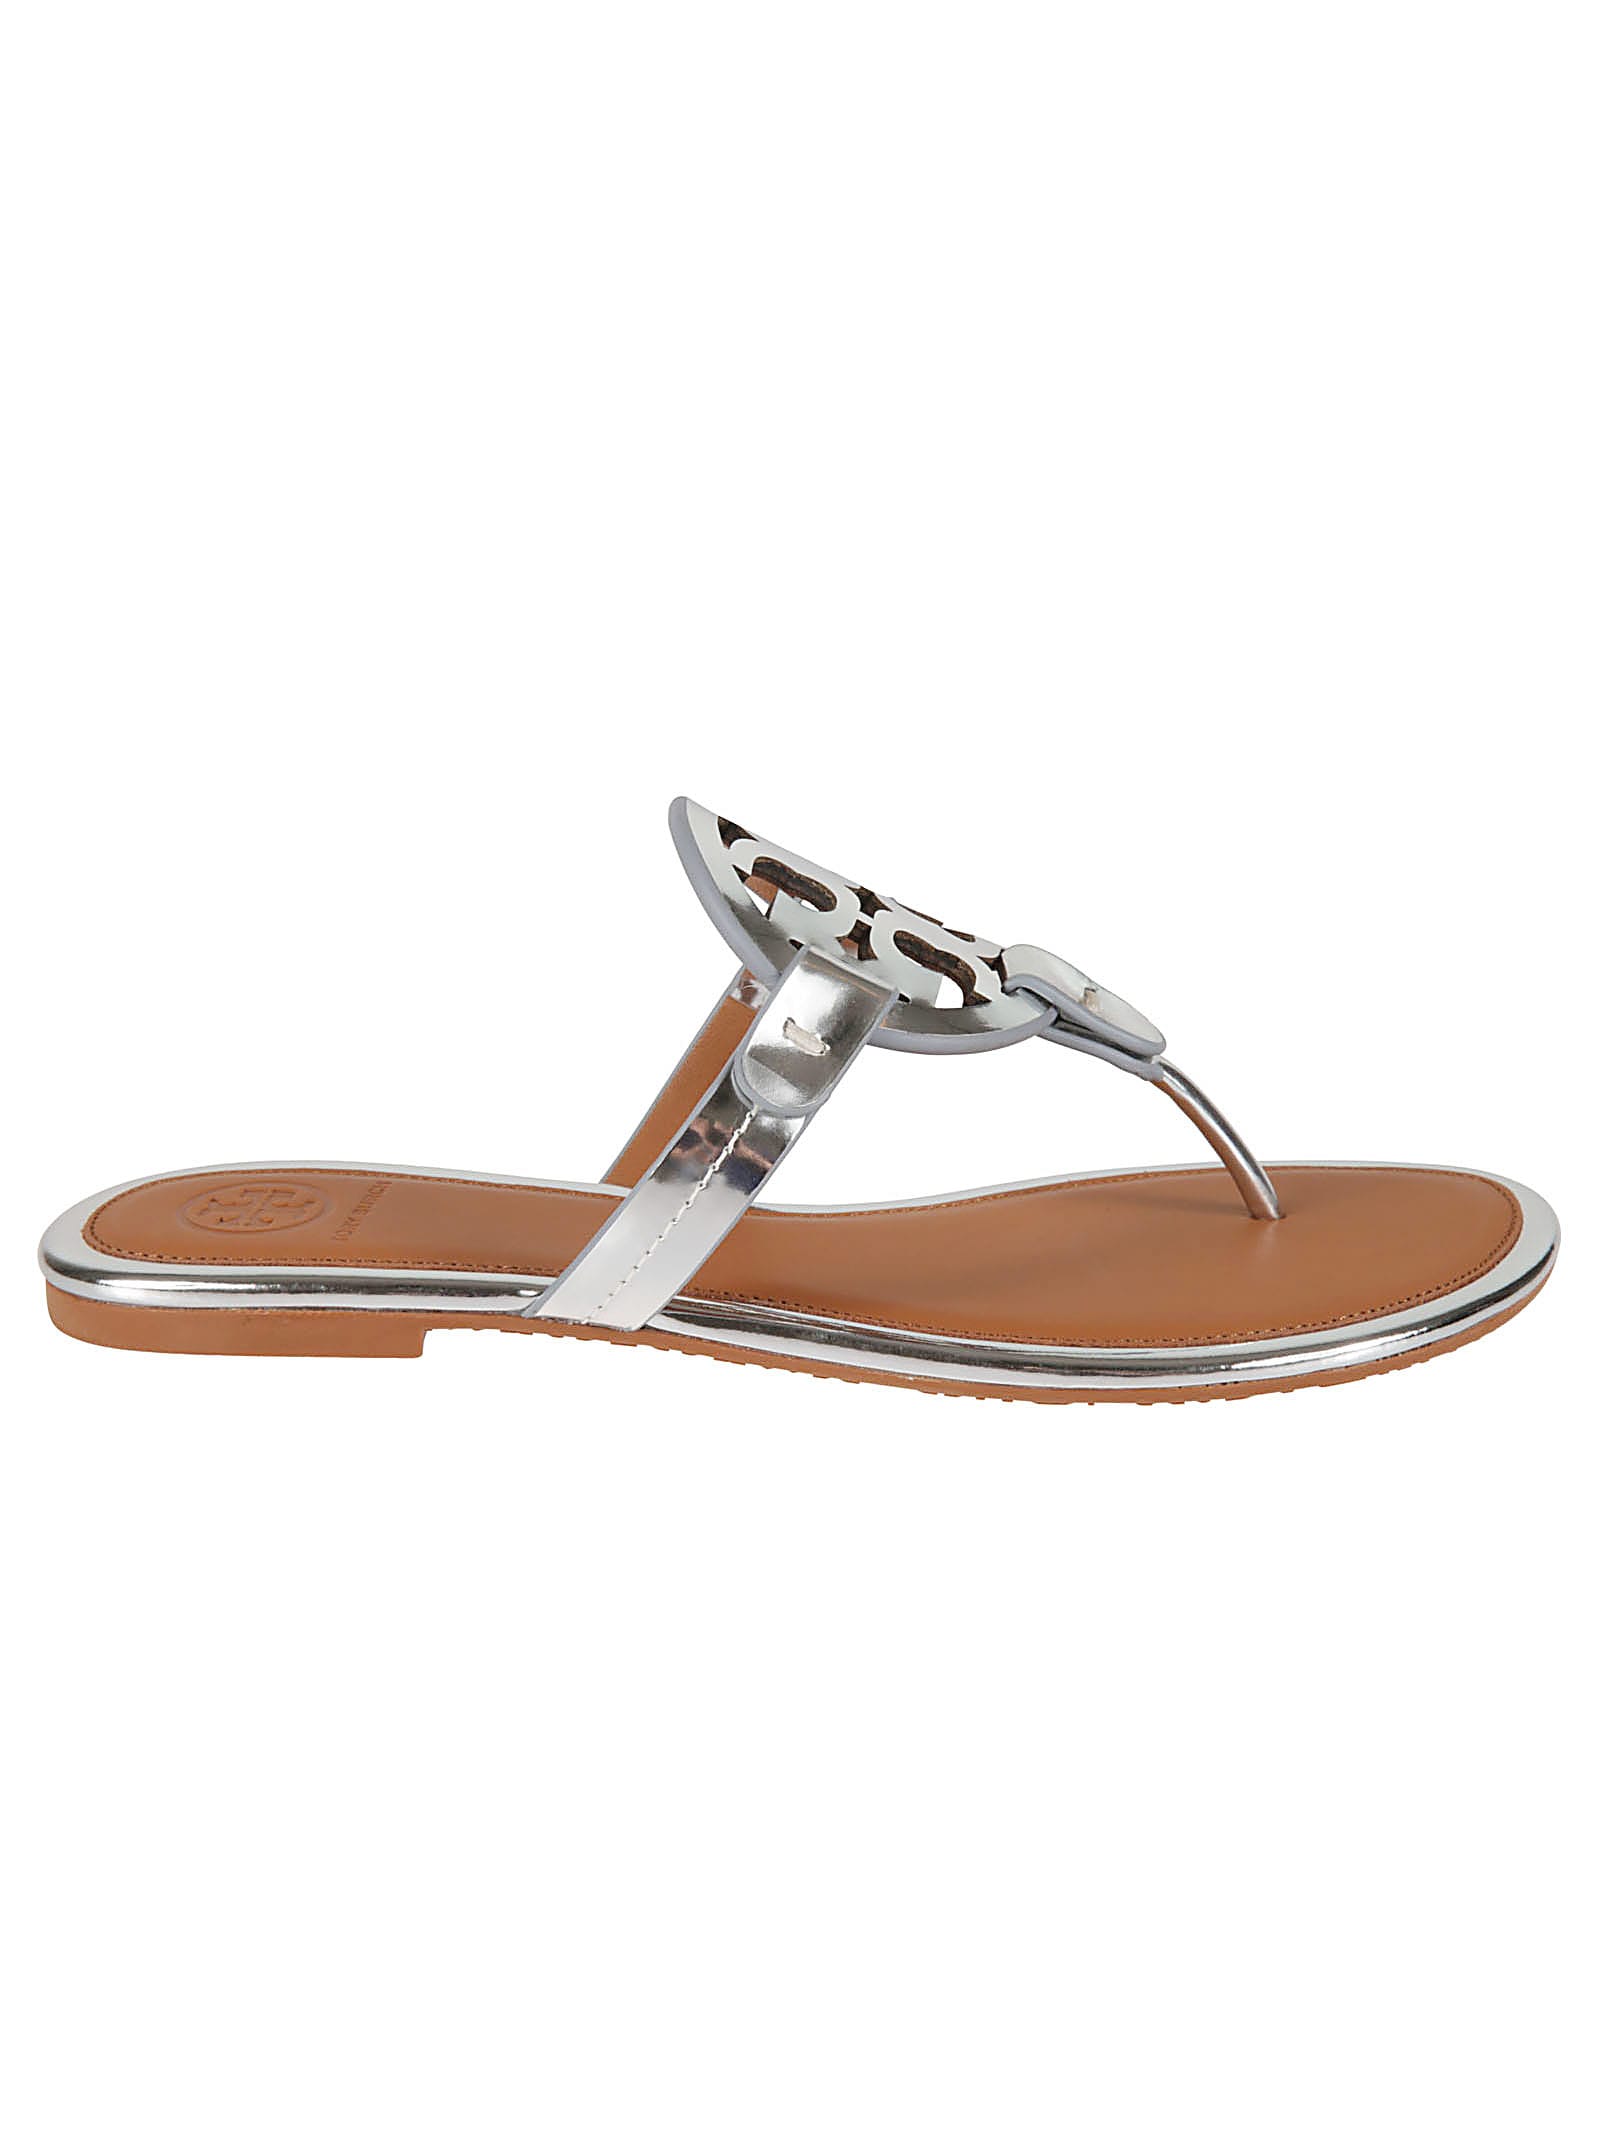 tory burch miller metallic sandal